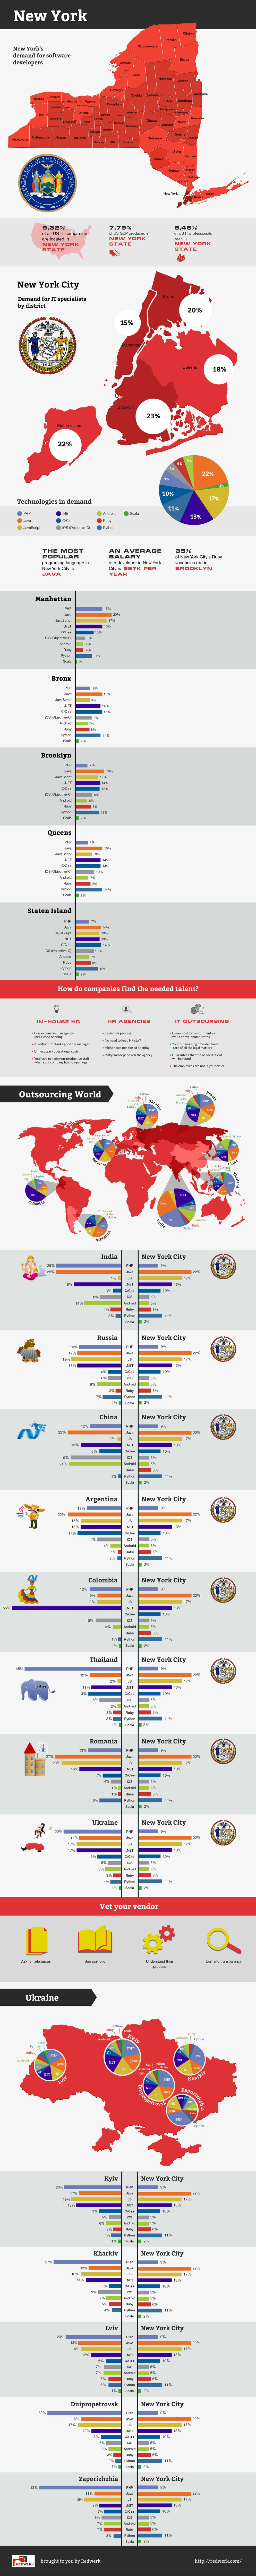 Software development technologies in demand in New York City / Infographic by Redwerk